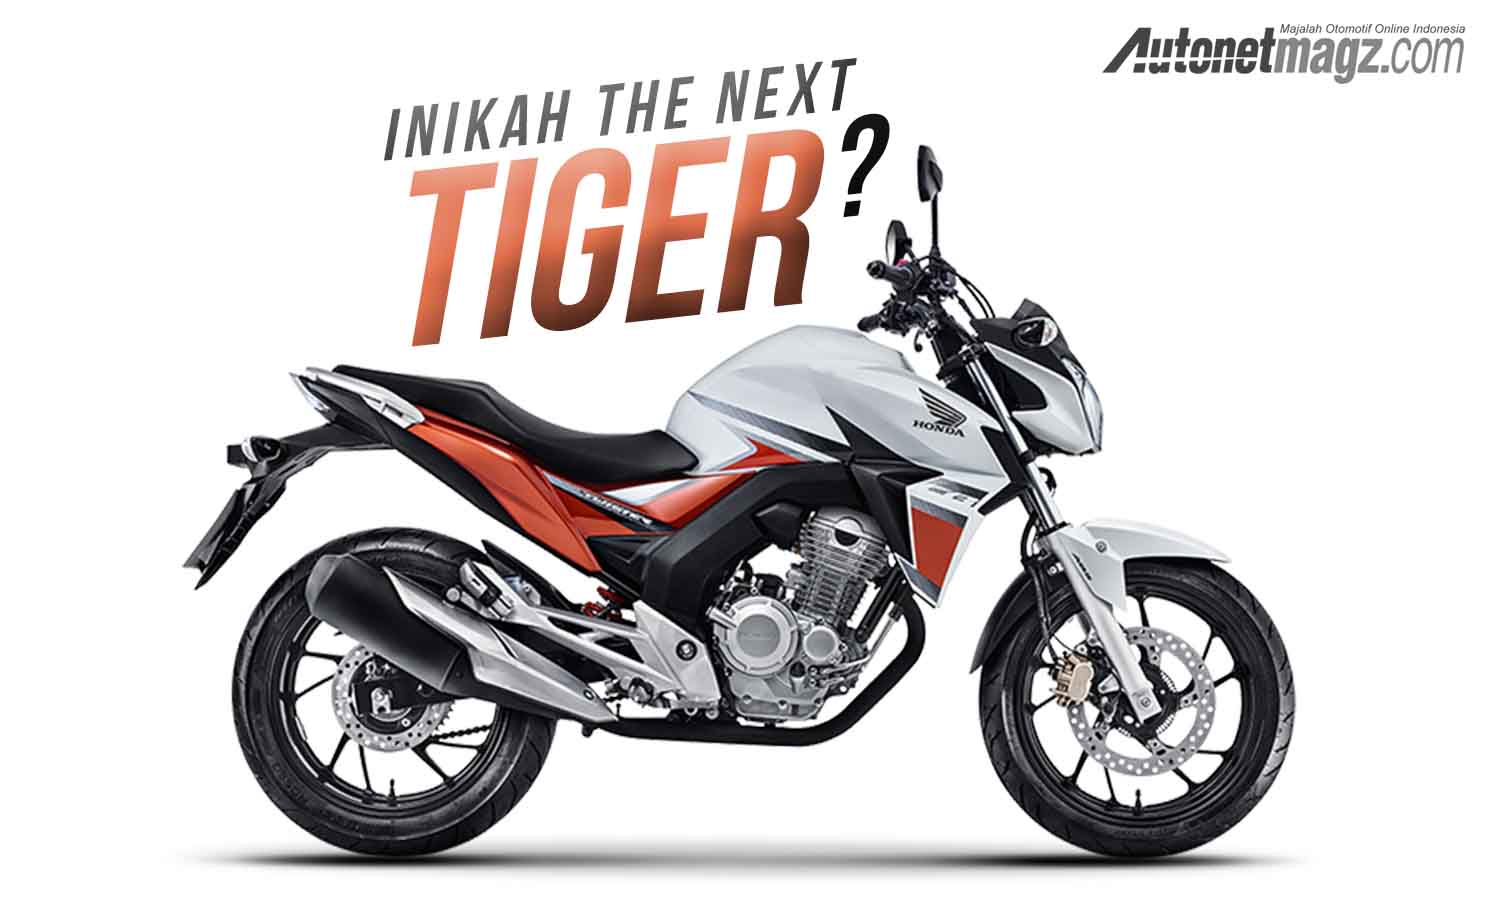 Berita, next tiger: Honda Indonesia Daftarkan Paten CB Twister 250, Next Tiger?